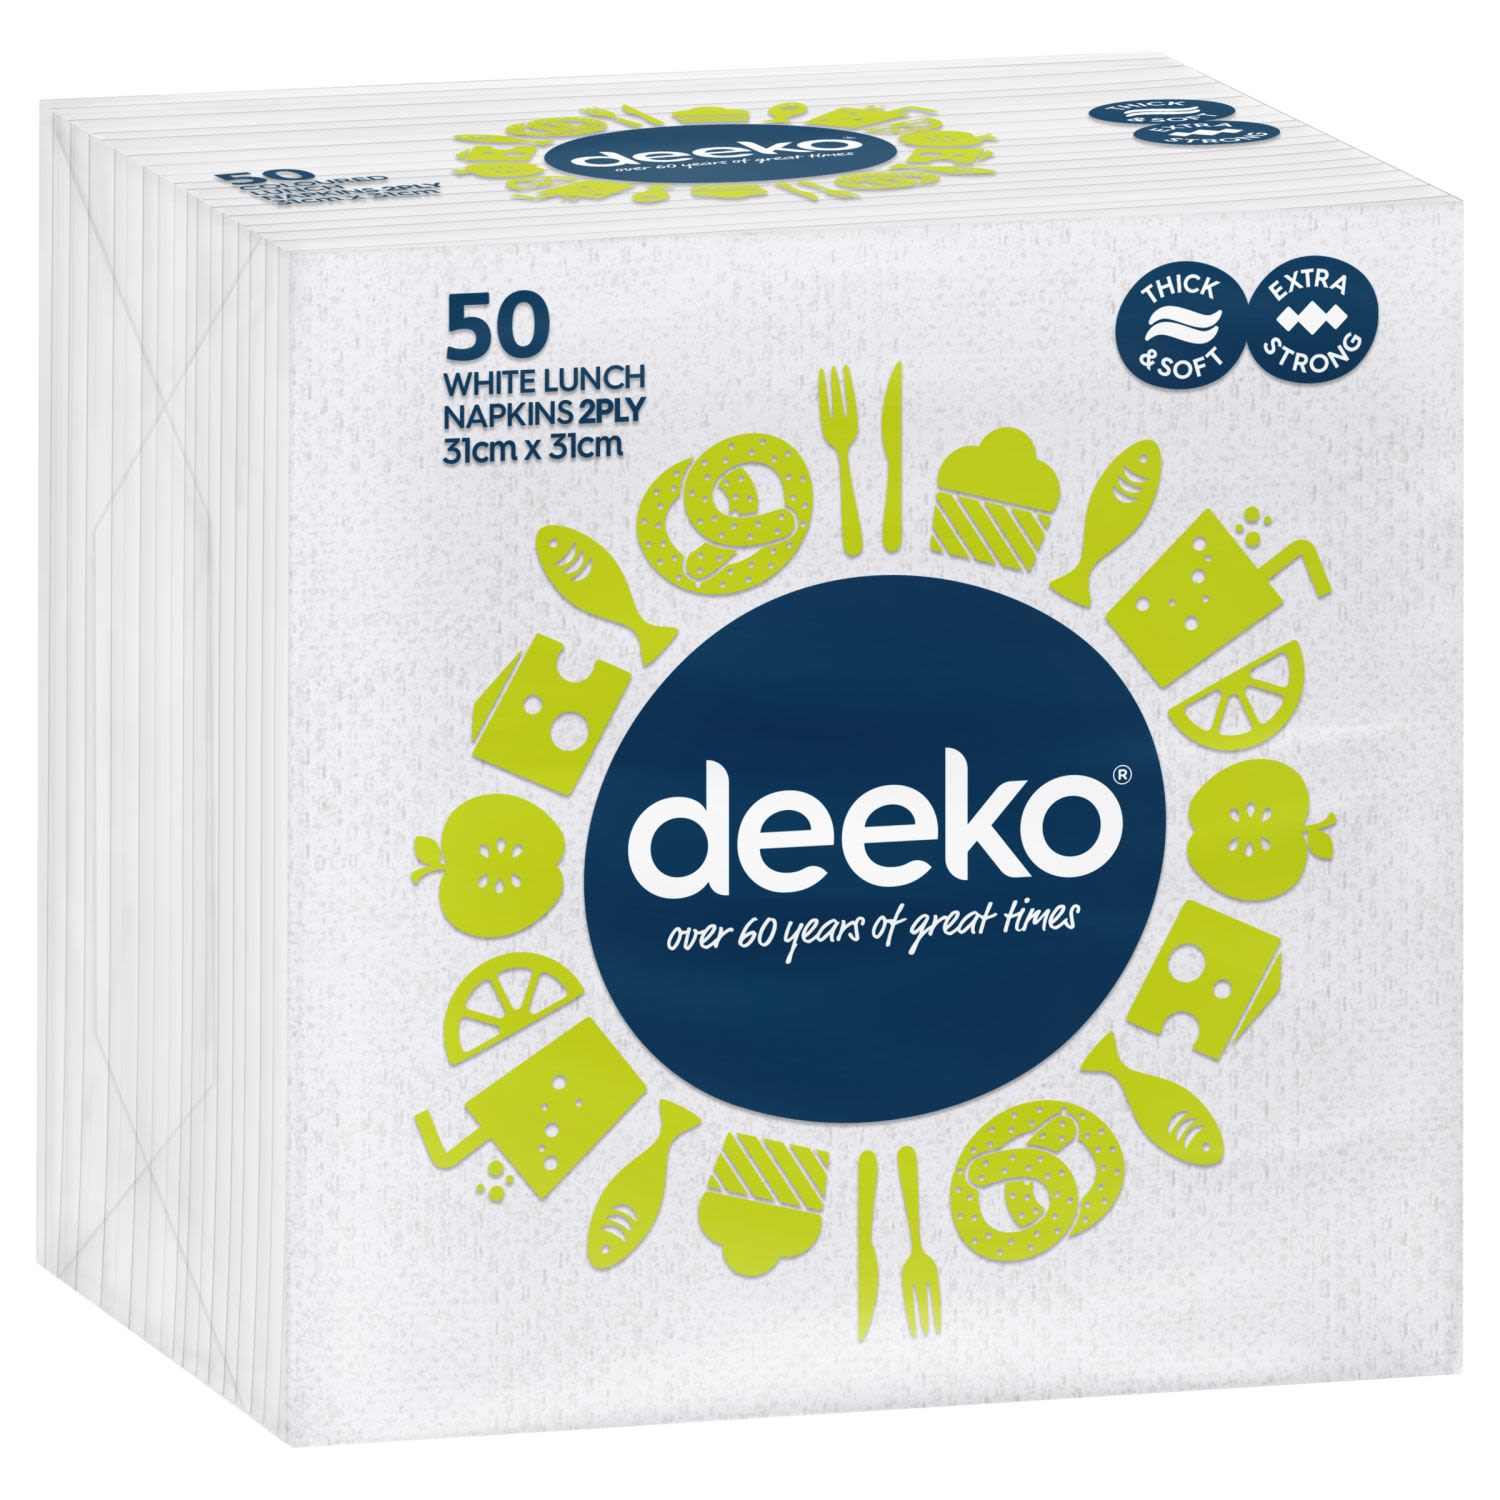 Deeko 2 Ply White Lunch Napkins 50 Pack, 50 Each